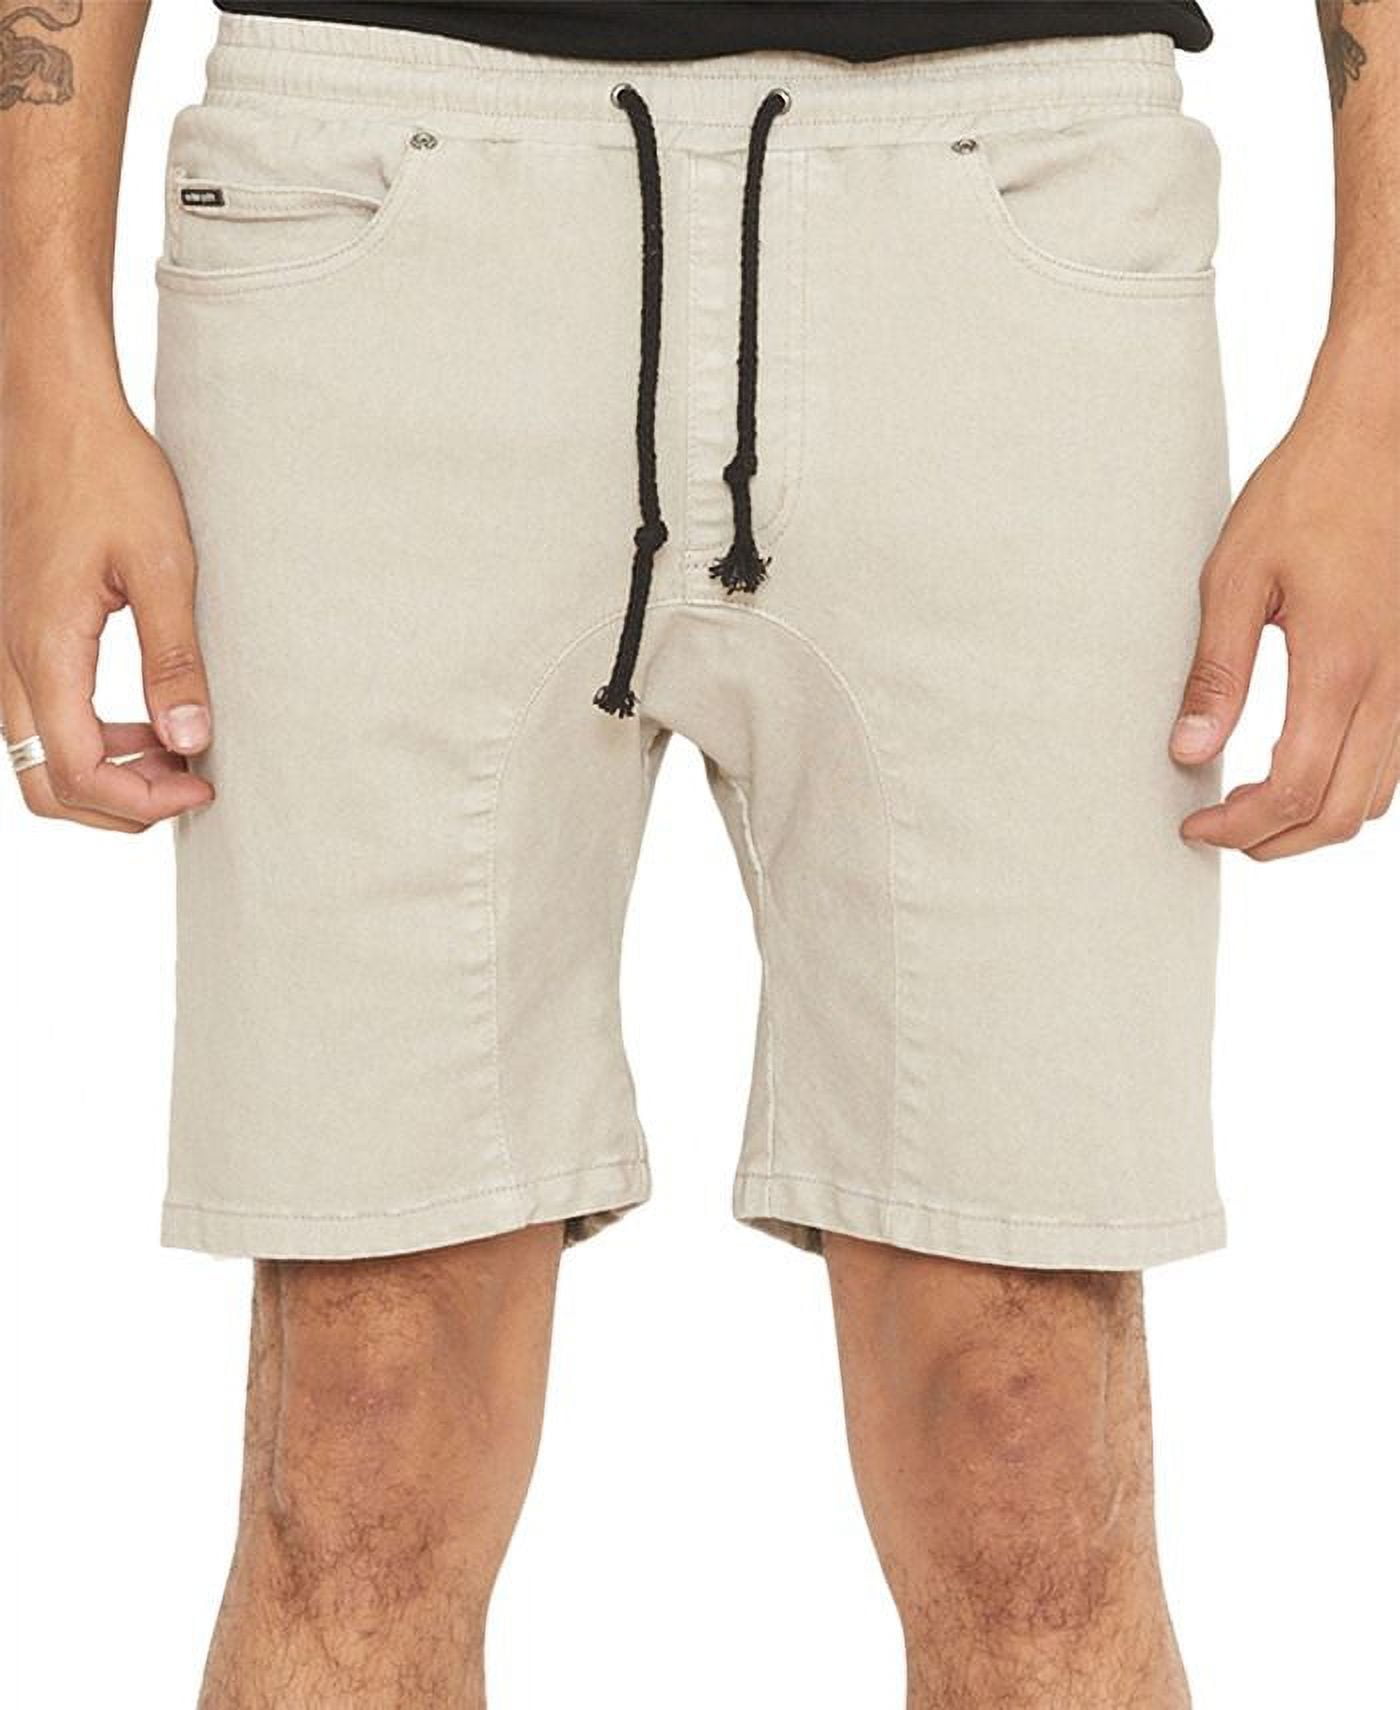 J Brand KAZAKORT Eli Cut-Off Slim Fit Jean Shorts, US 36 at  Men's  Clothing store